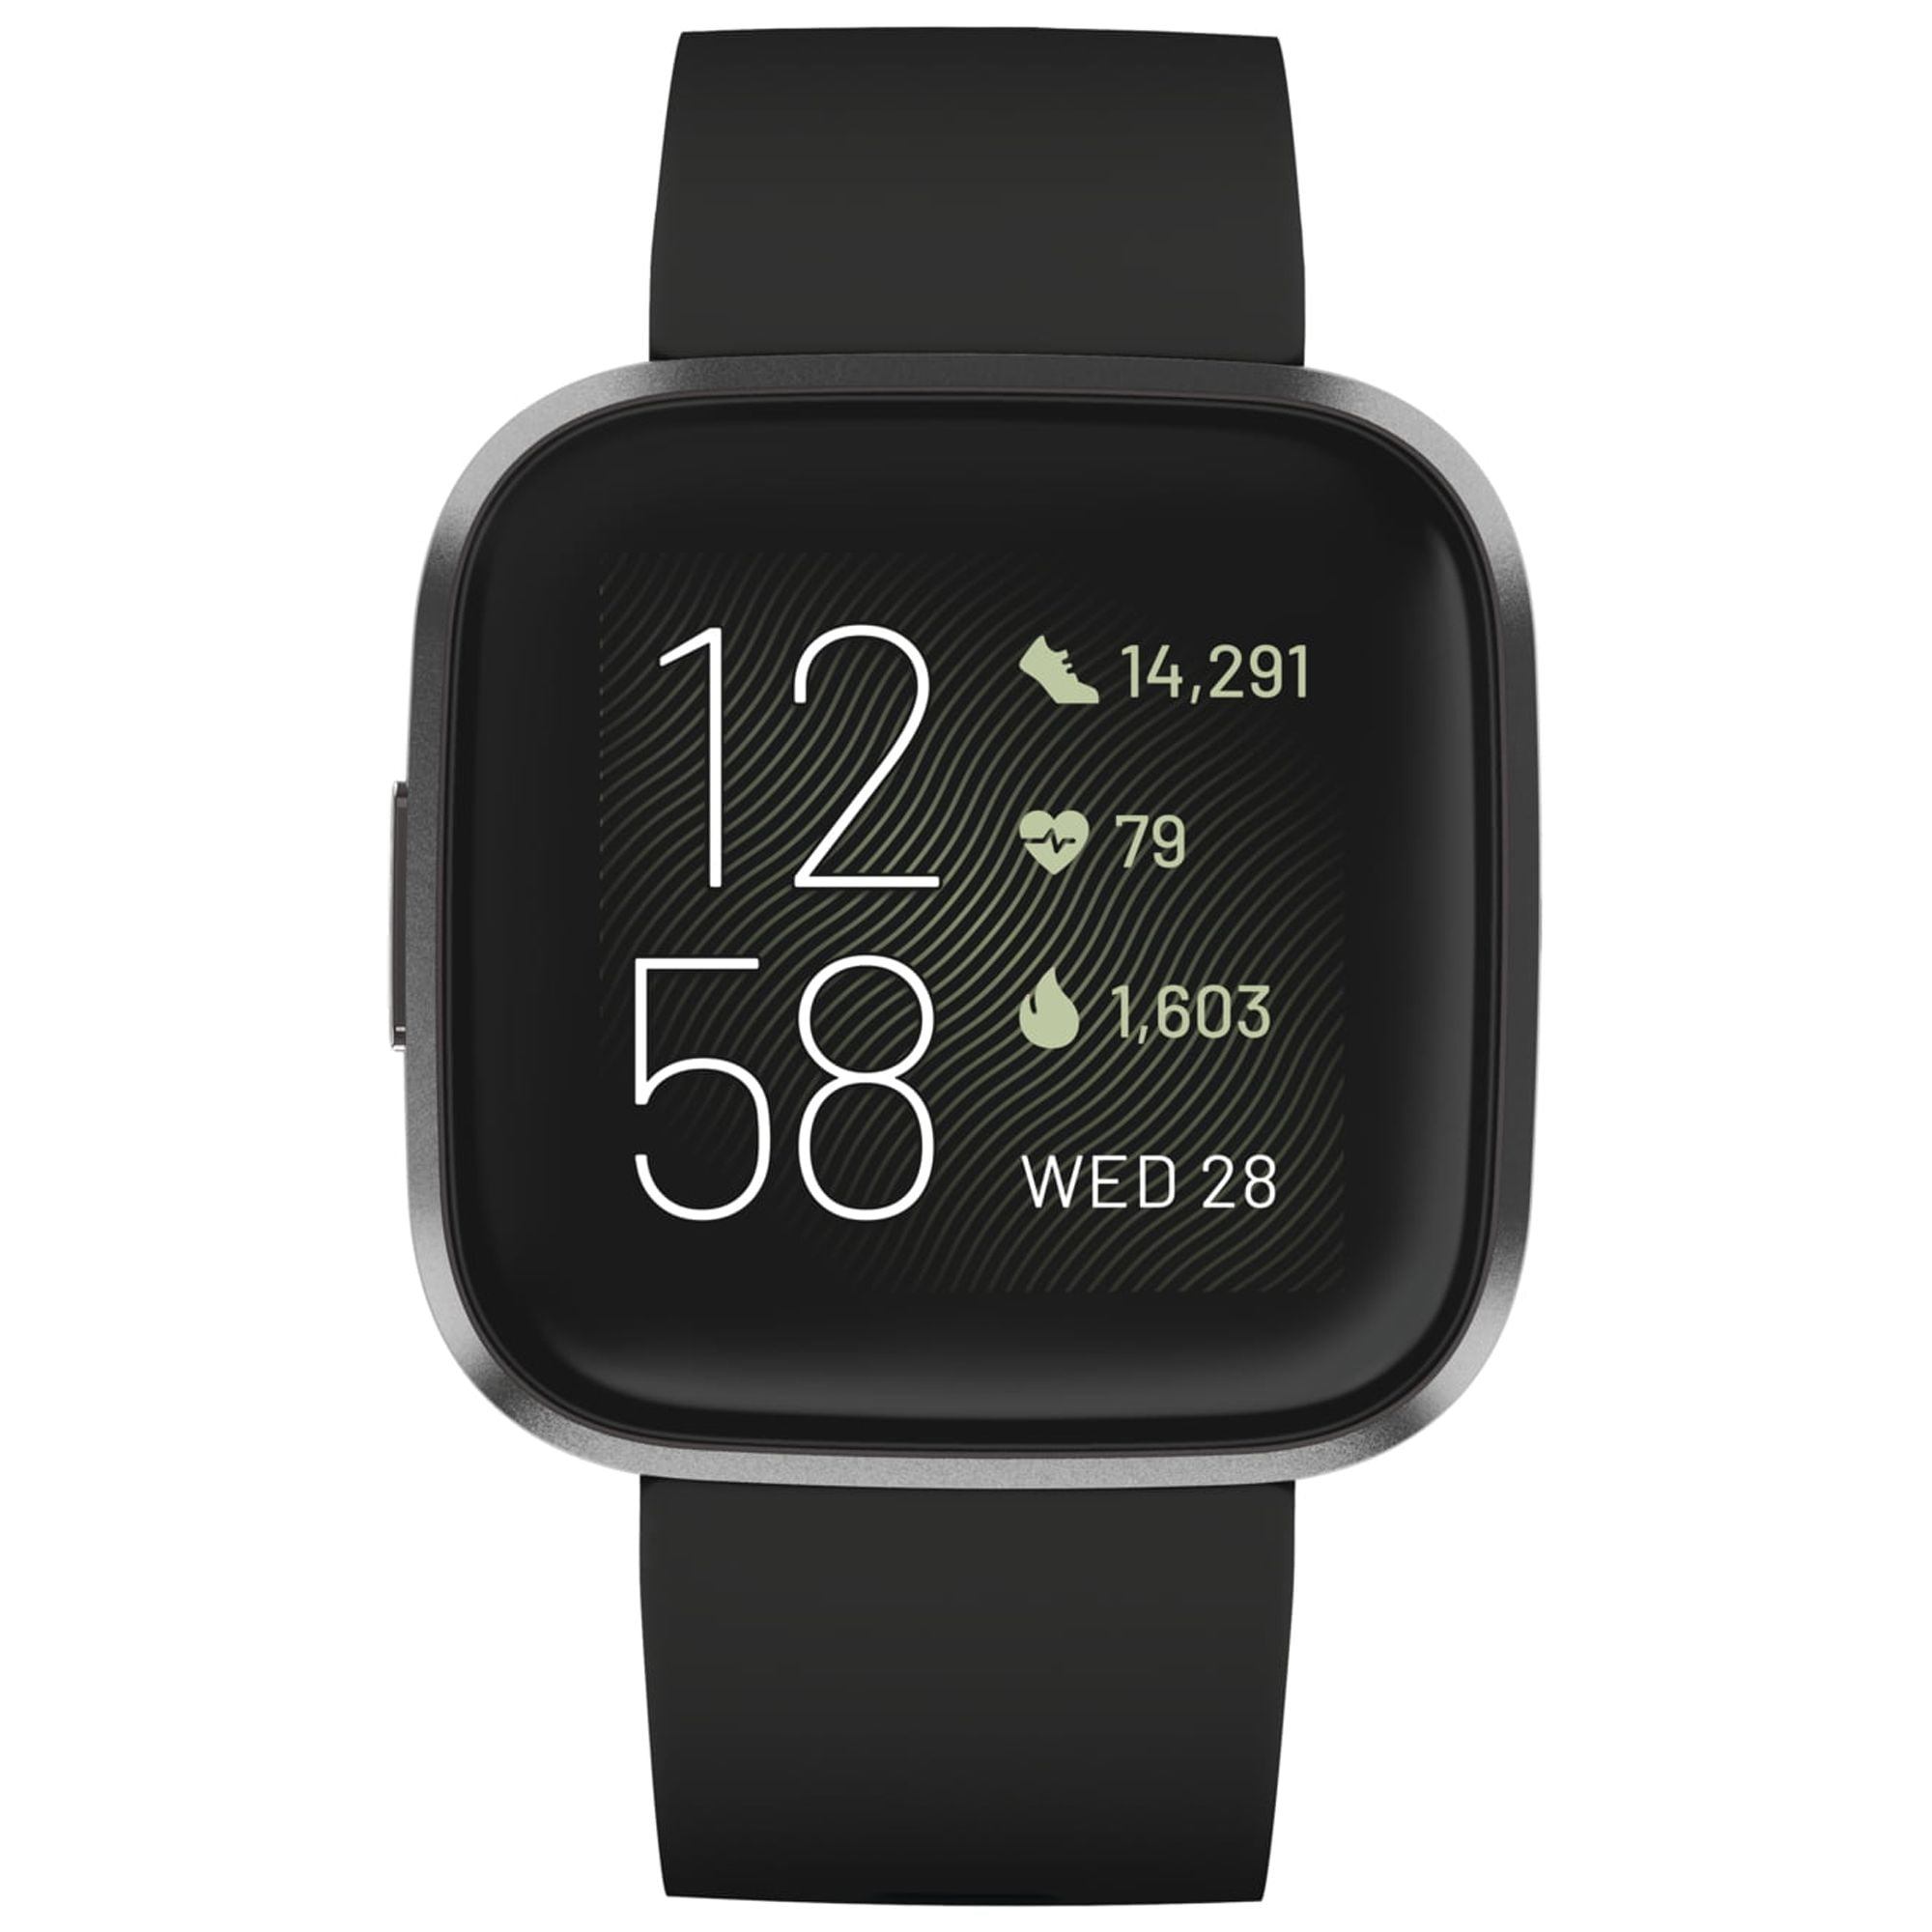 Still the best smartwatch, but the Fitbit Versa is a close second - CNET